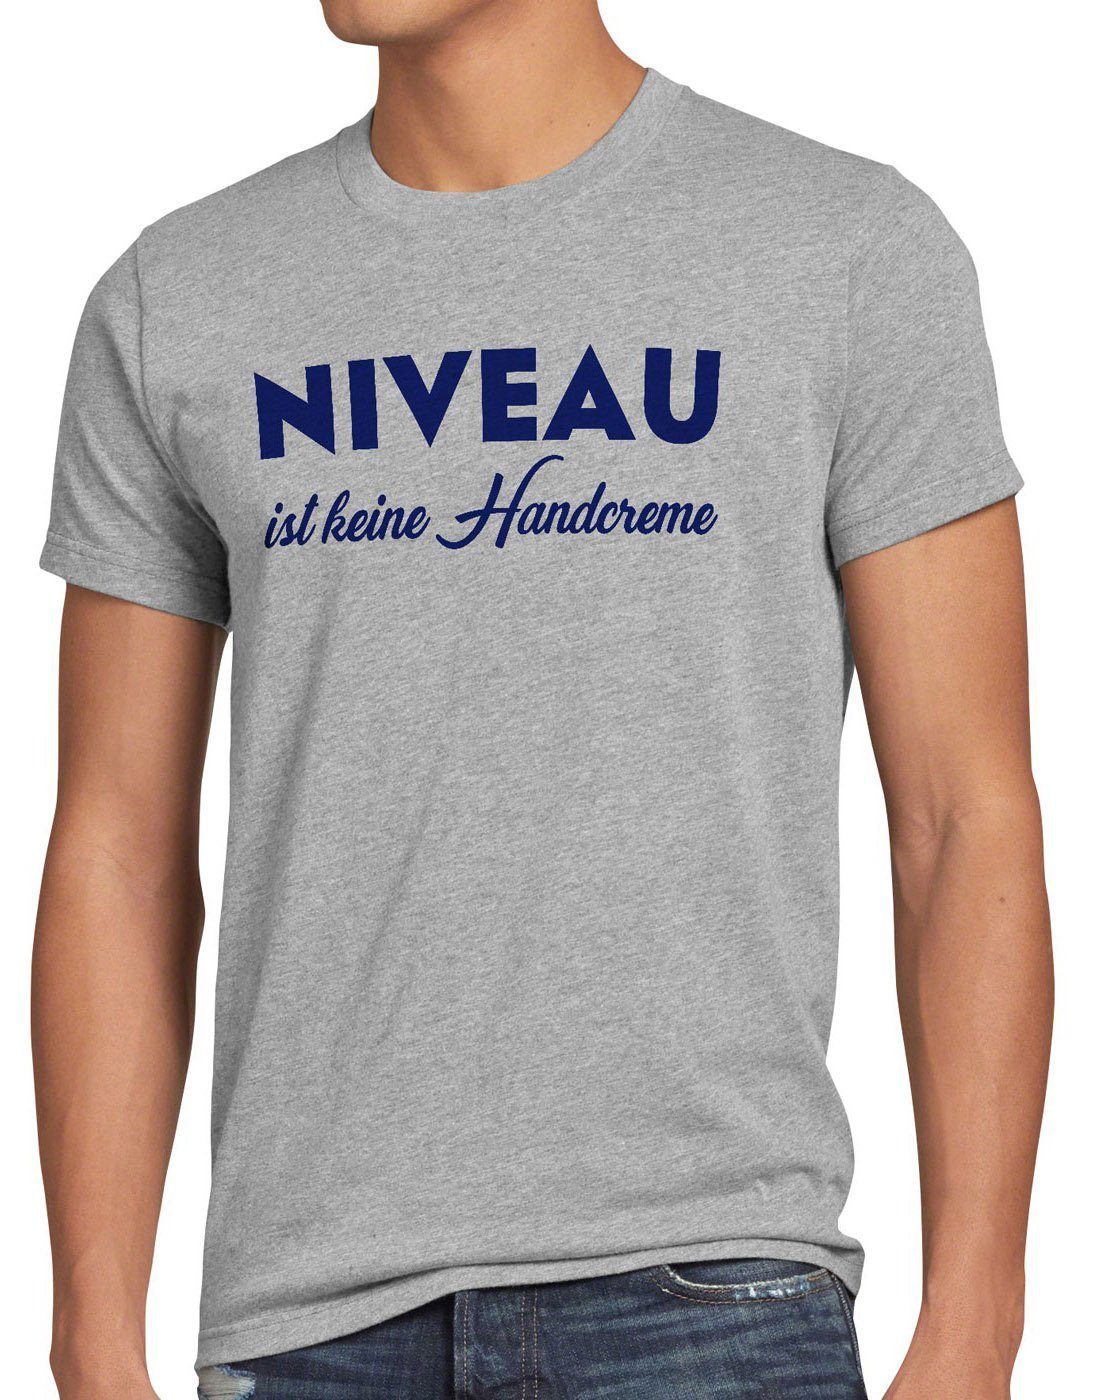 style3 Print-Shirt Herren T-Shirt Niveau ist keine Handcreme Creme Funshirt Spruch nivea fun lustig grau meliert